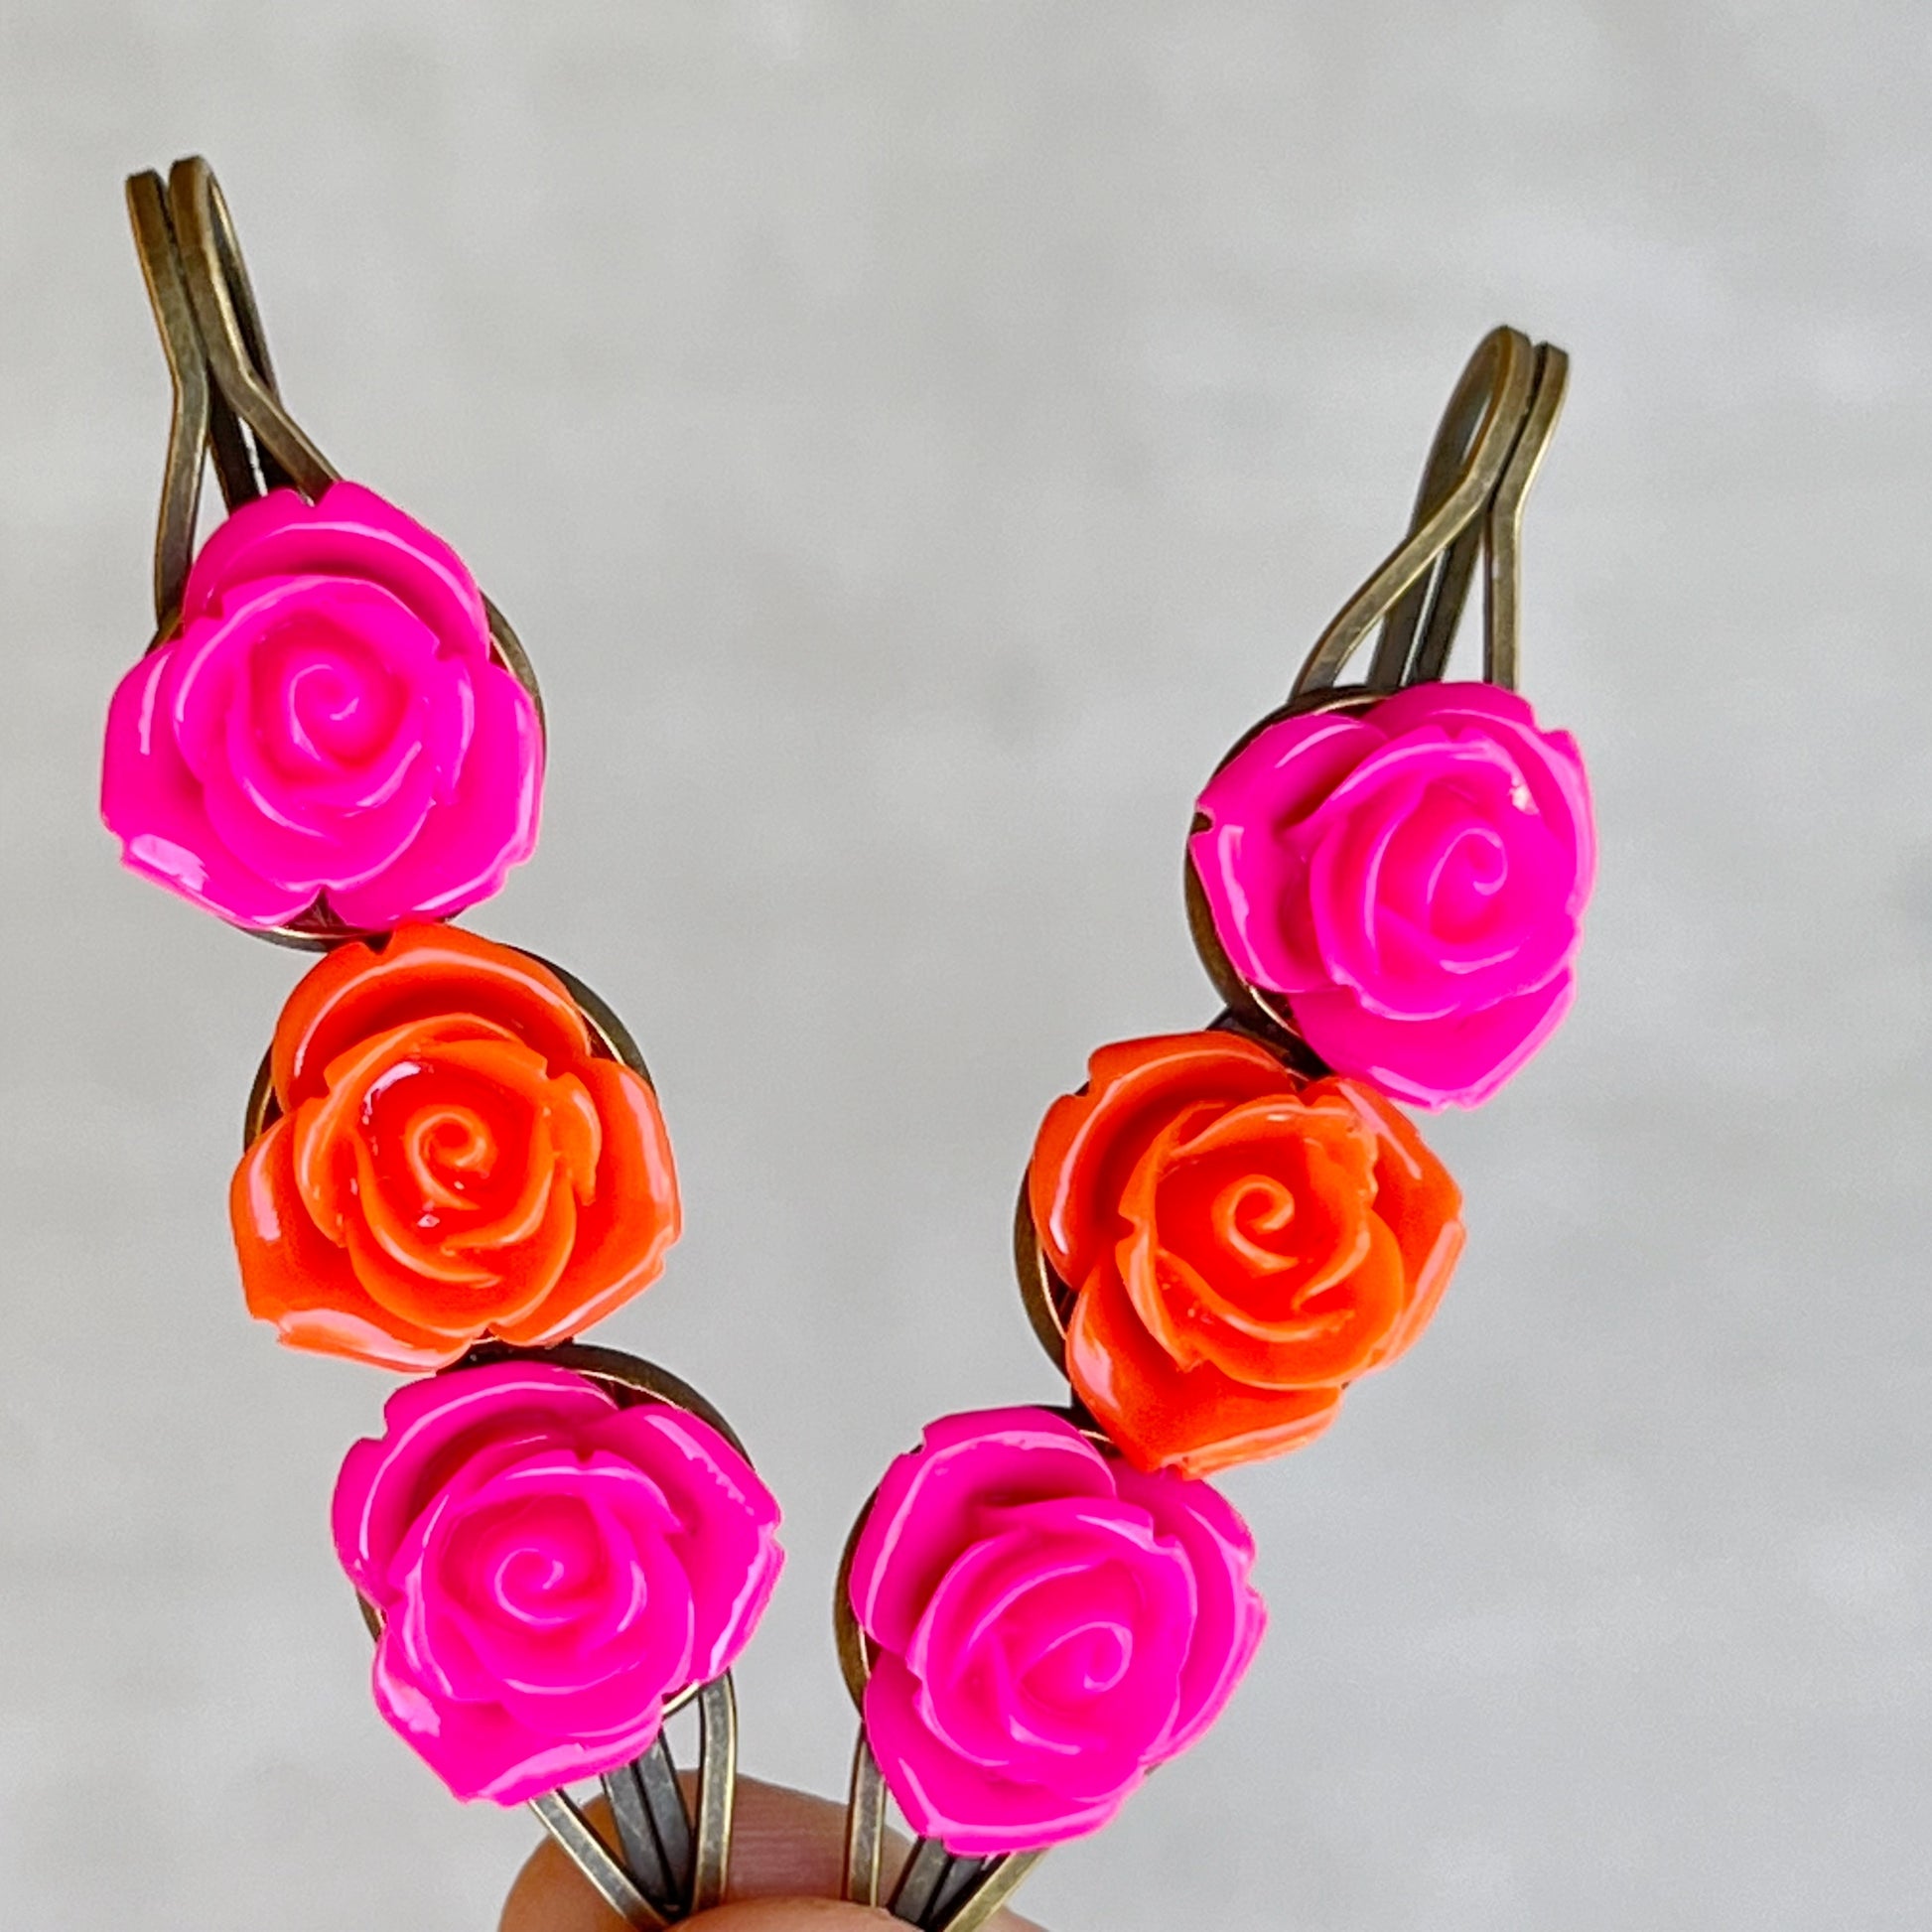 Pink & Orange Rose Flower Hair Pin Set: Vibrant Floral Accents